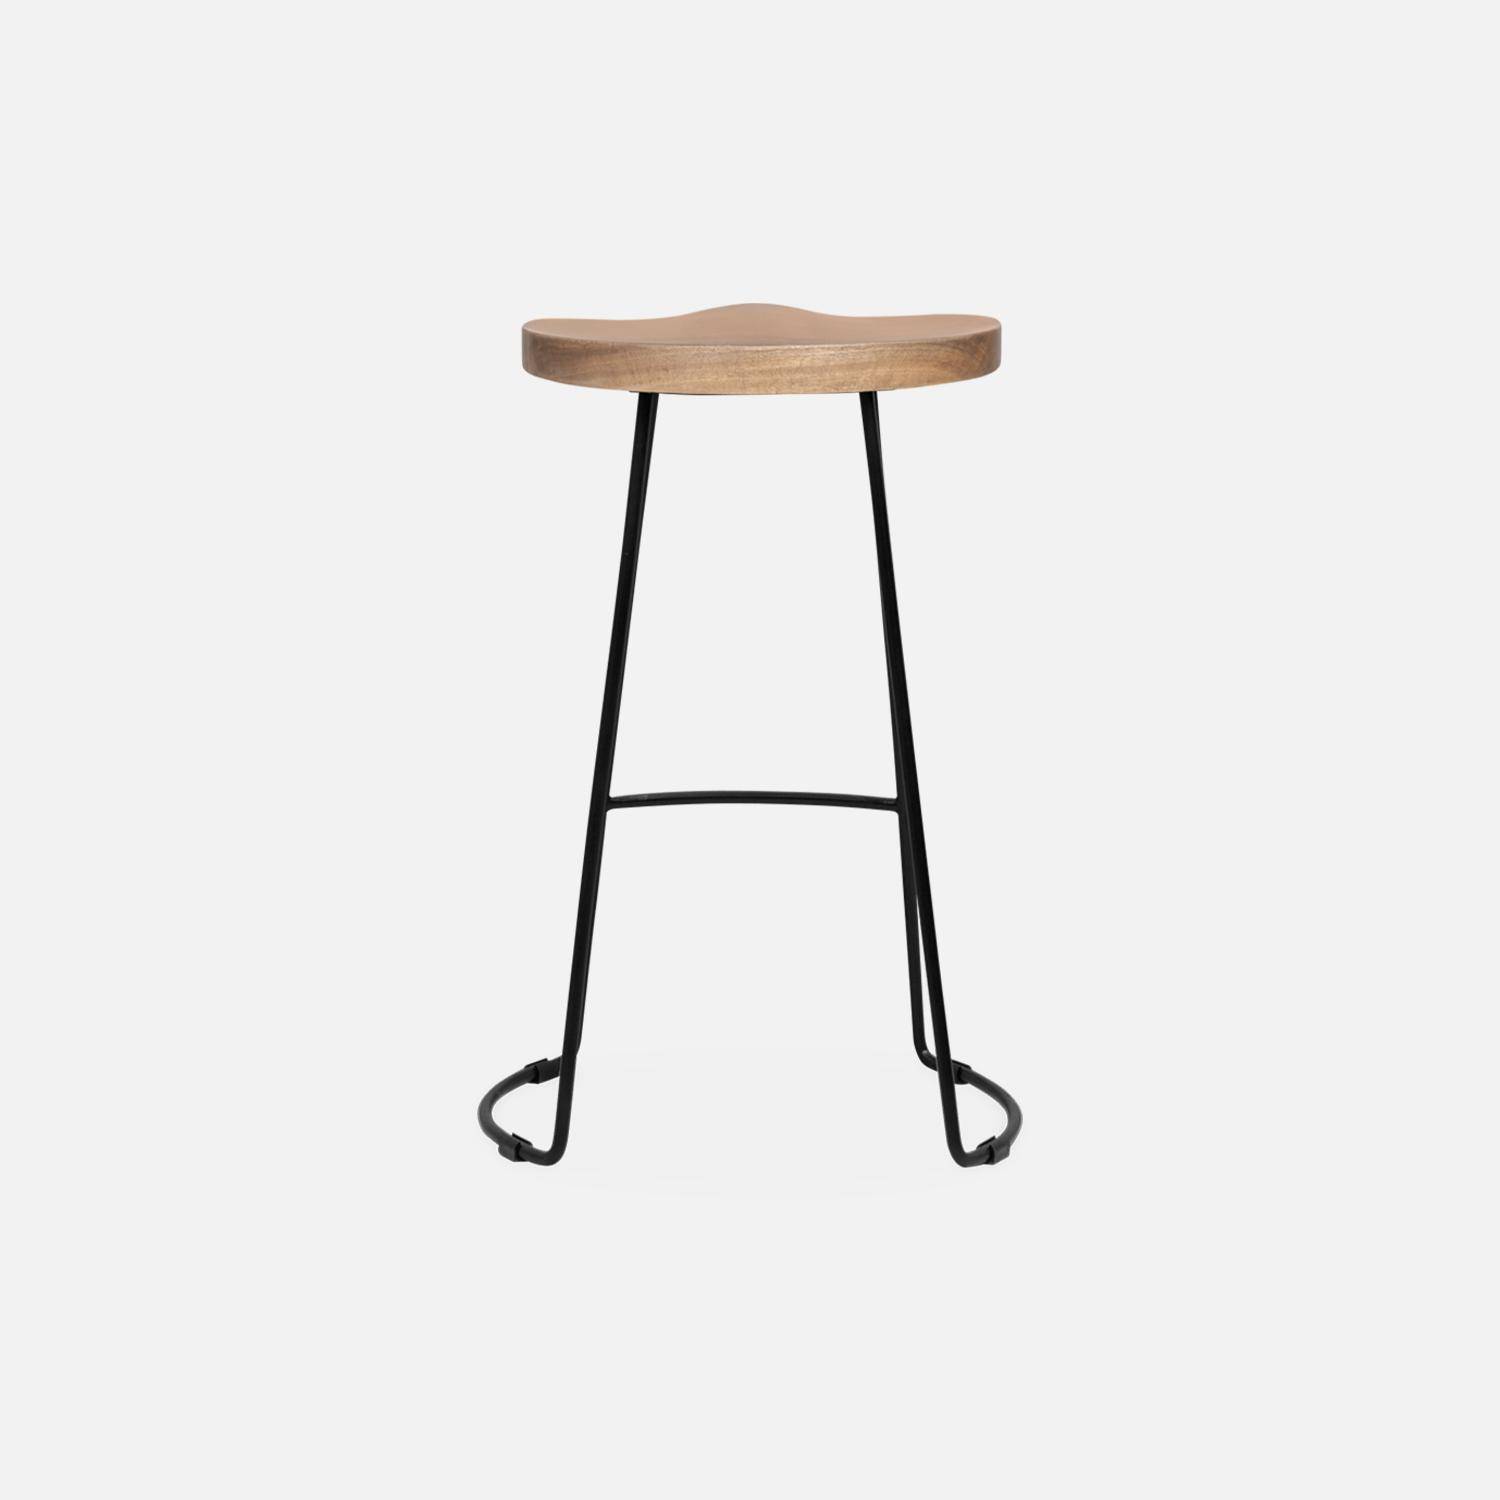 Set of 4 industrial metal and wooden bar stools, 44x36x65cm, Jaya, Mango wood seat, black metal legs Photo6